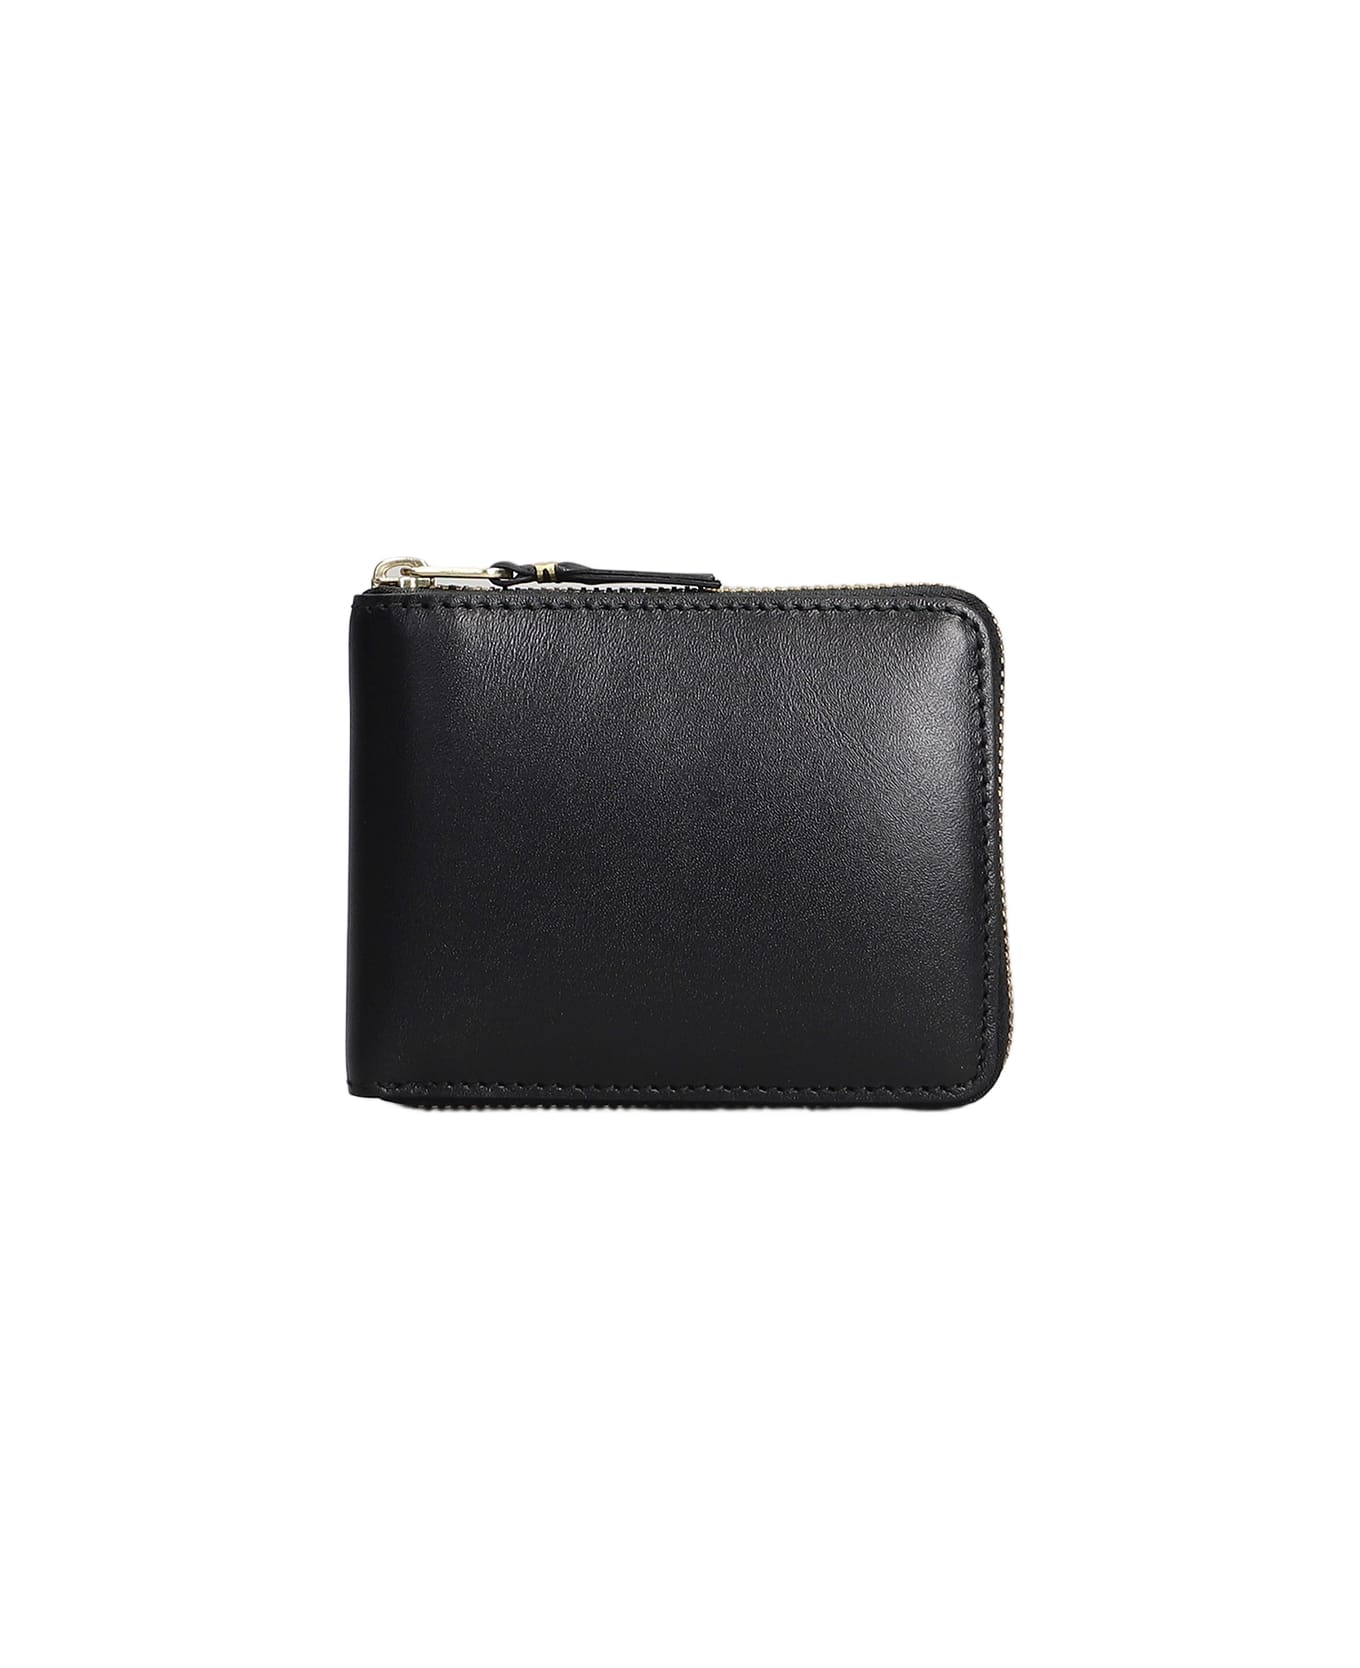 Comme des Garçons Wallet Wallet In Black Leather - black 財布